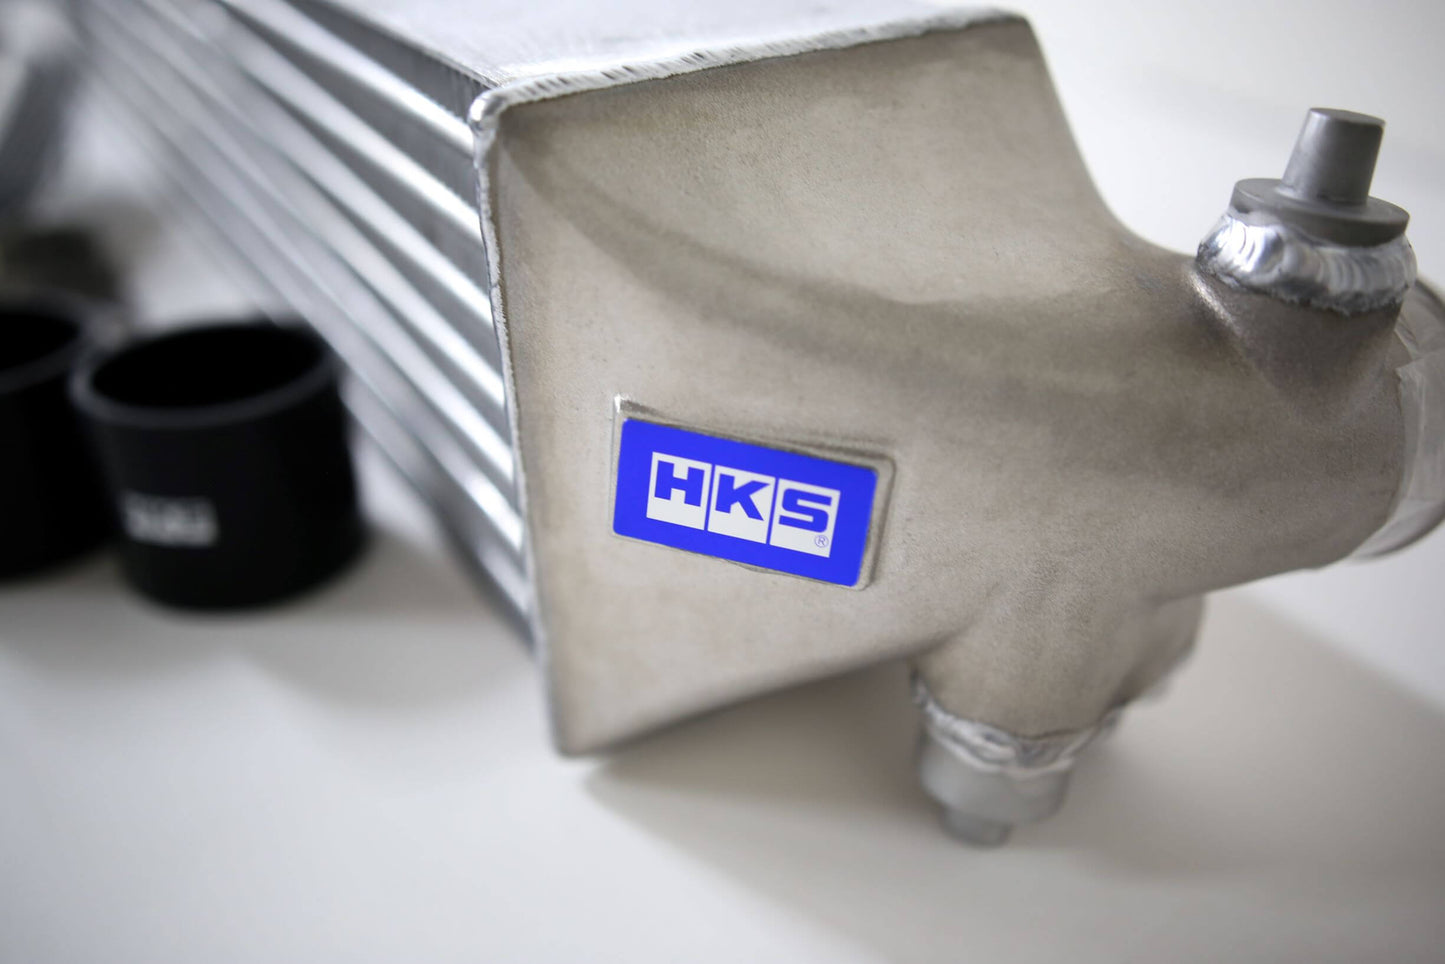 HKS Intercooler Kit Cooling Series (HONDA)